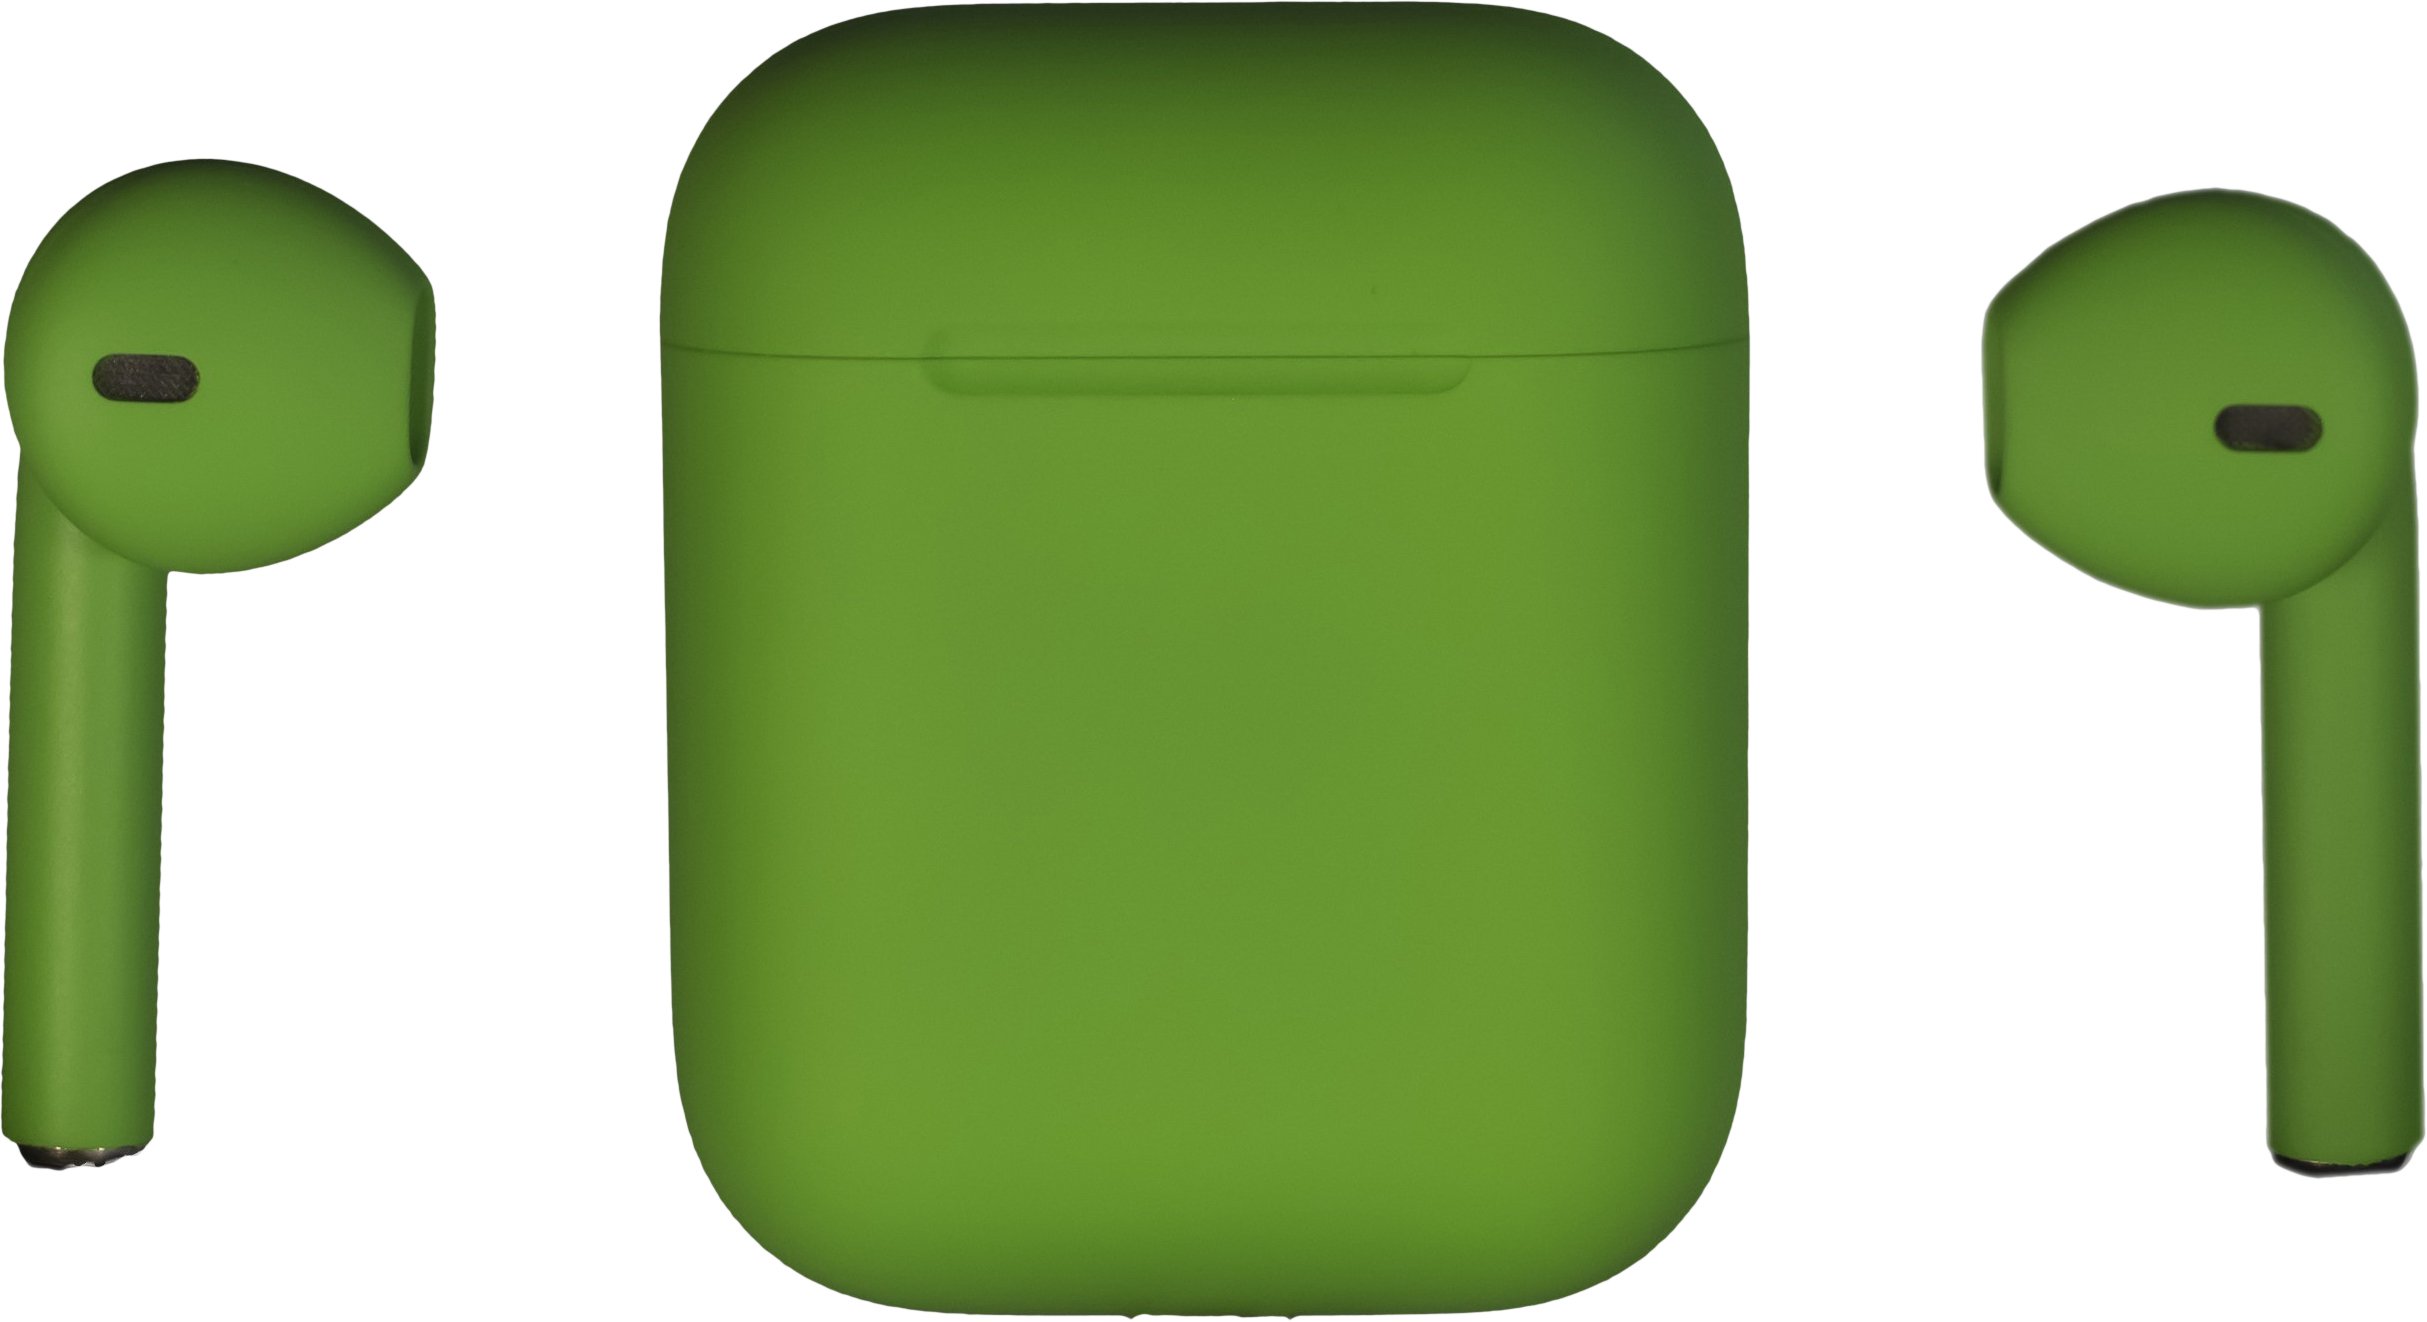 Зеленые аирподсы. Apple AIRPODS 2 Color. Наушники Apple AIRPODS Max, зеленый. Наушники Apple беспроводные зеленые. Беспроводные наушники Apple AIRPODS Pro 2 (матовые), зеленый матовый.